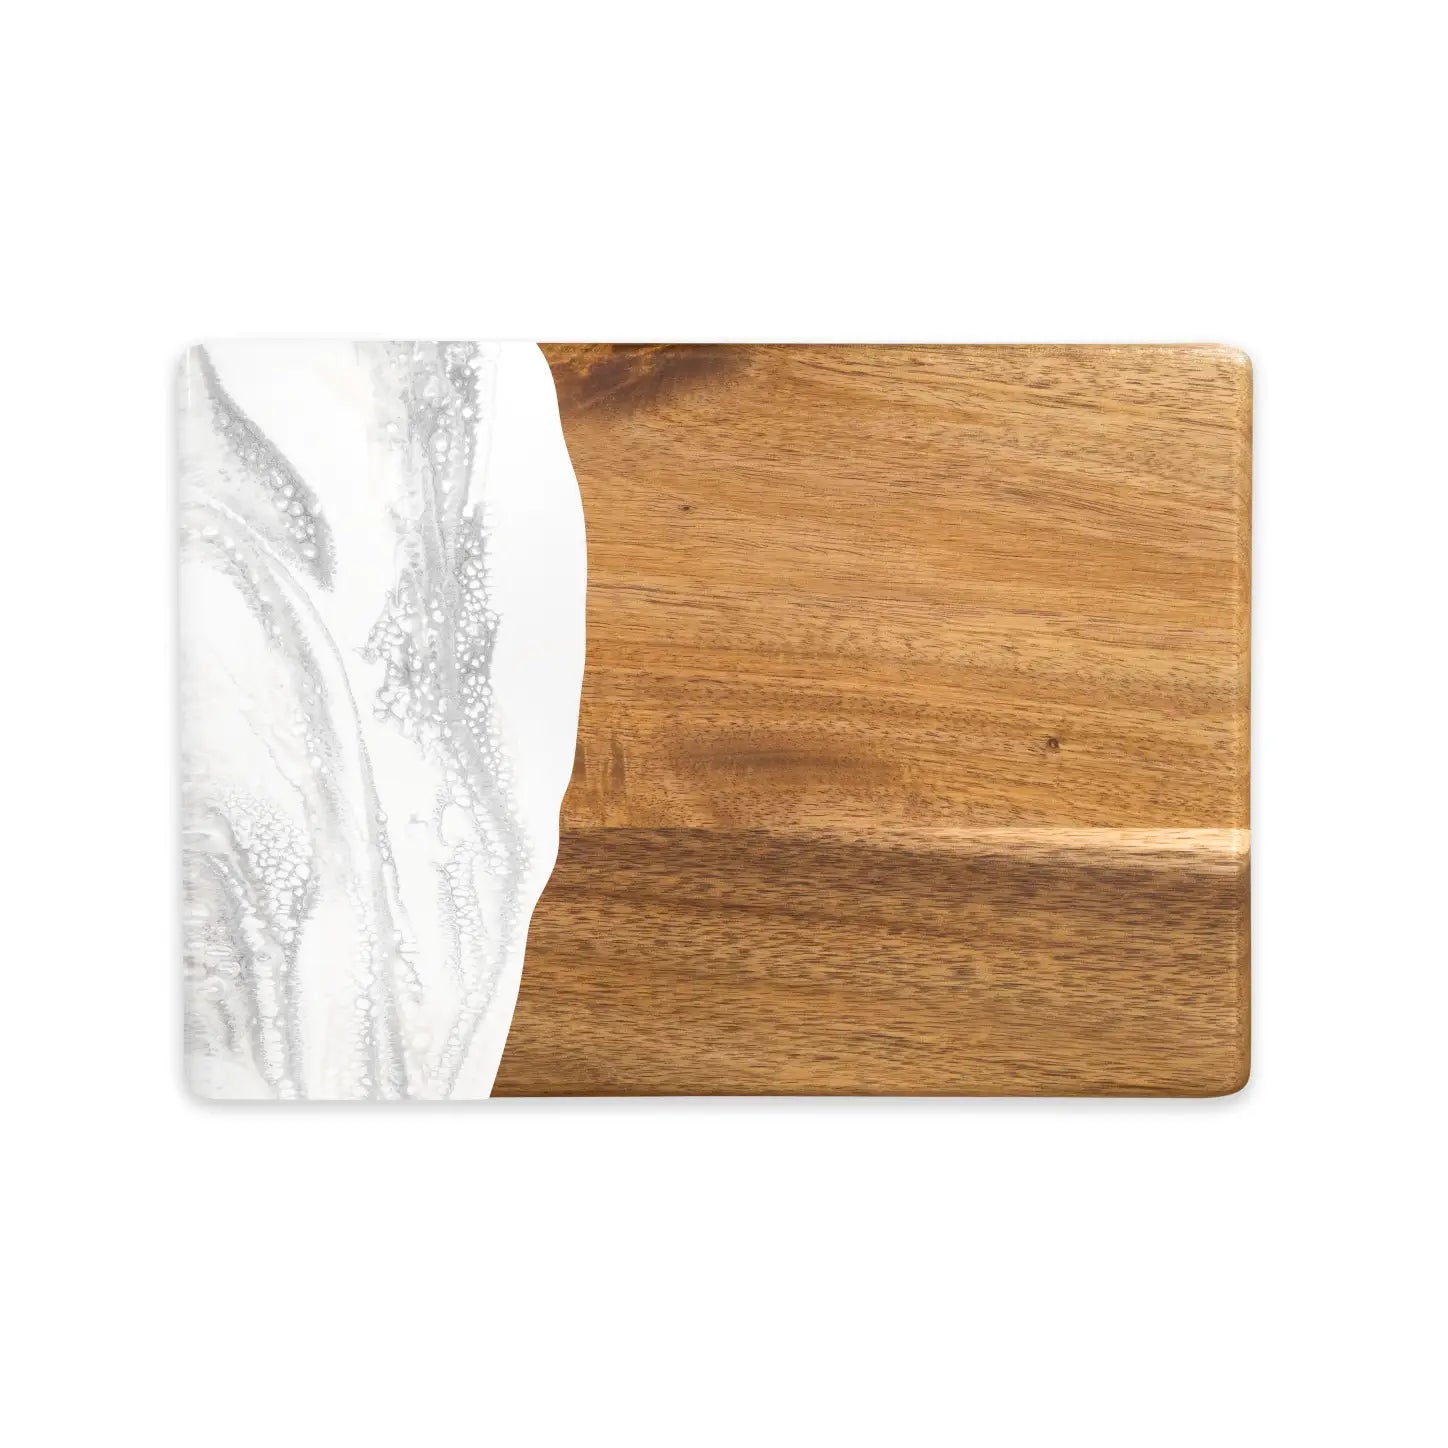 Small acacia wood and resin cheeseboard - marble